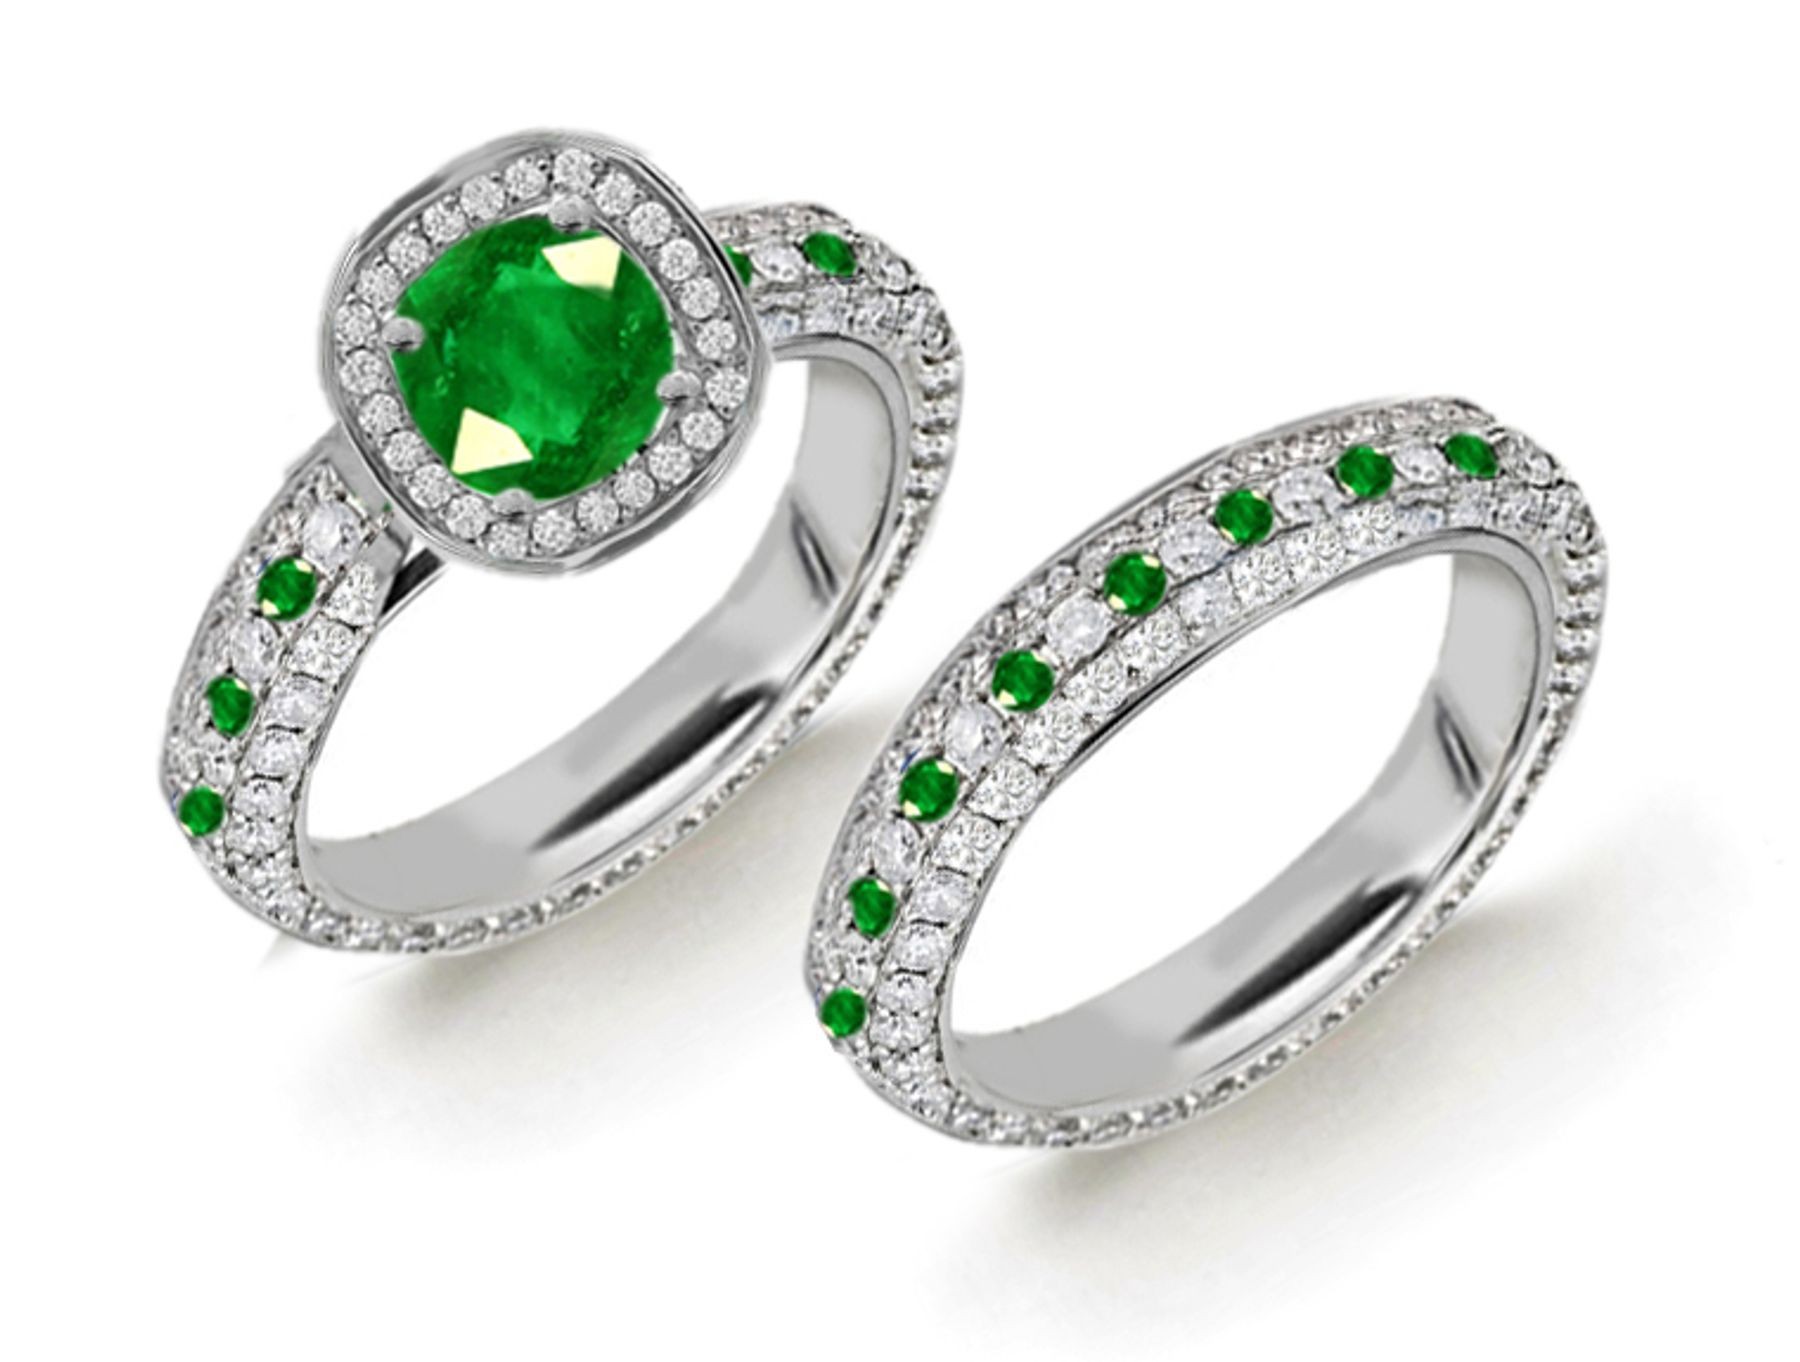 NEW STOCK: 14k Gold & Platinum Emerald Diamond Halo Engagement Ring & MicropavEmerald Diamond Band